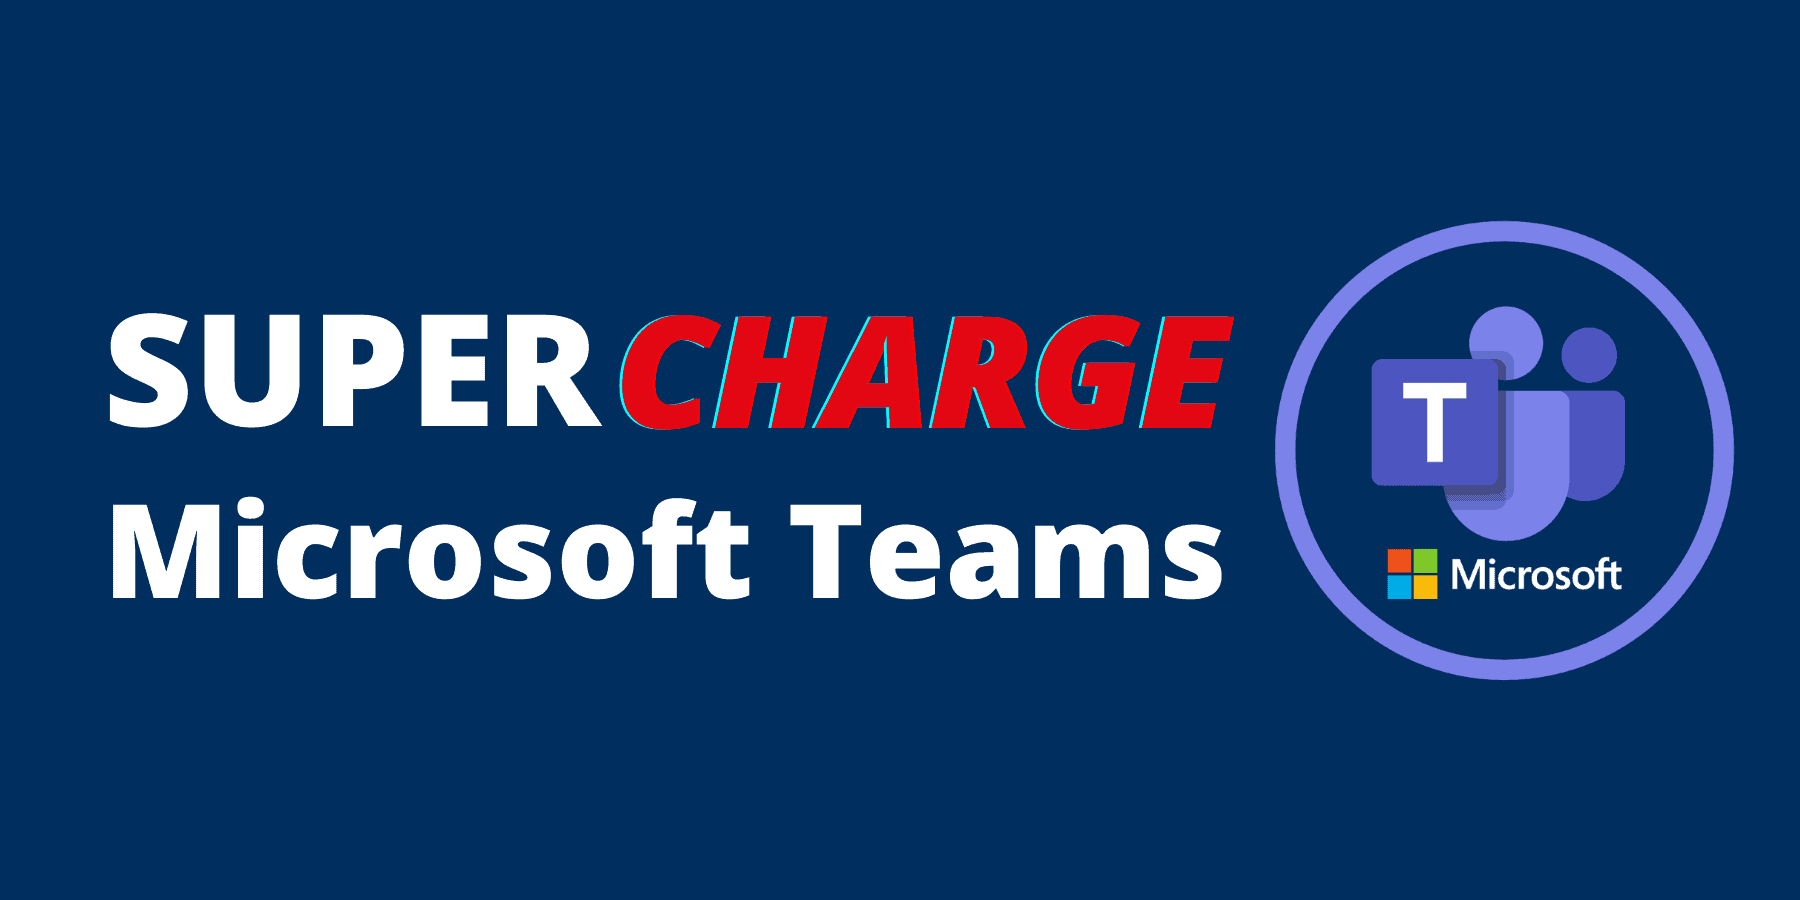 Supercharge Microsoft Teams